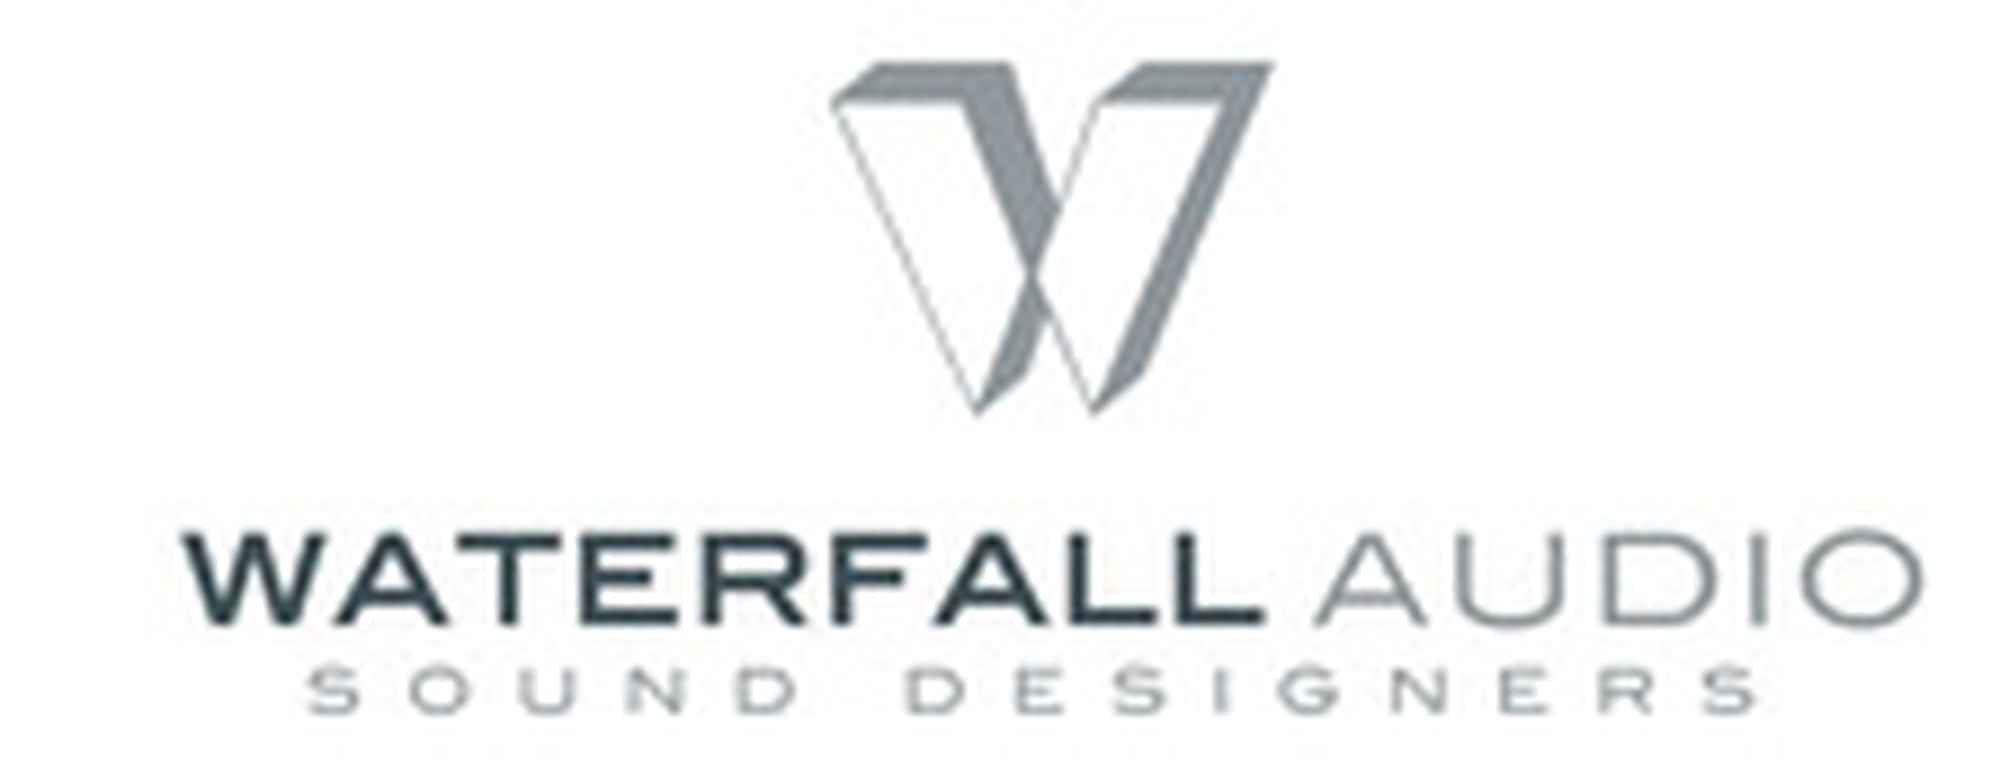 waterfall-audio-logo.png